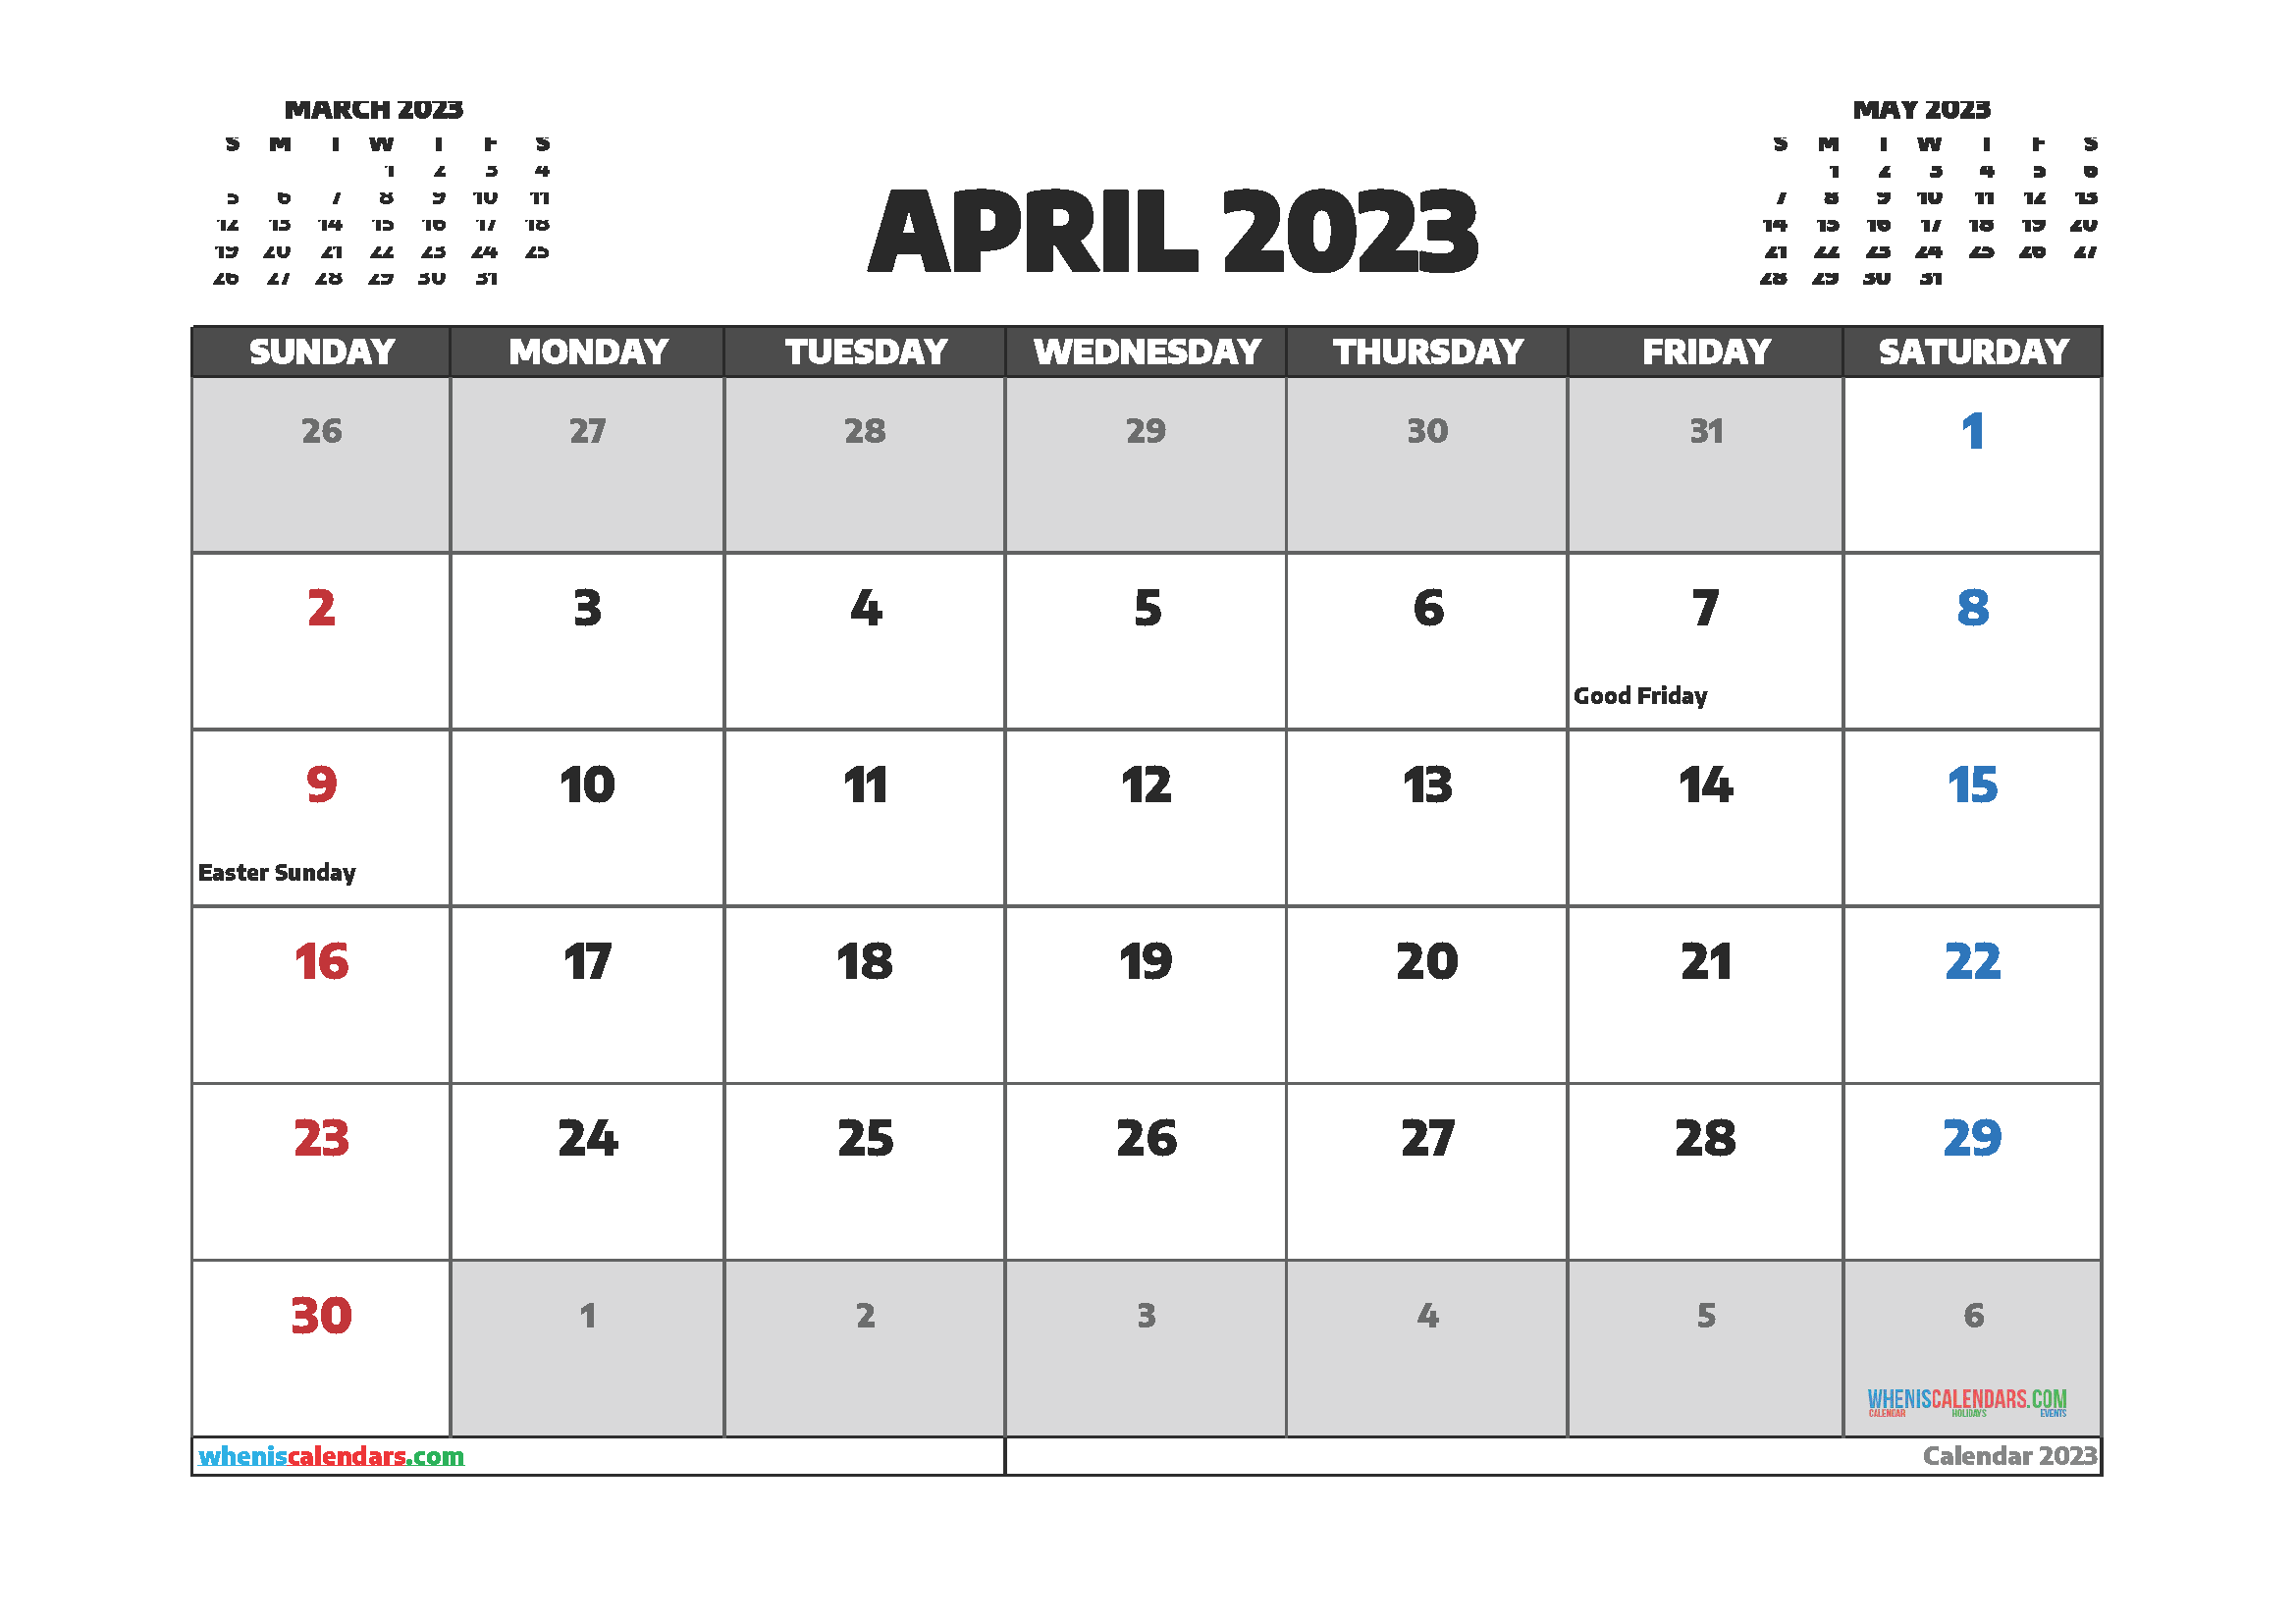 free-printable-may-2023-calendar-12-templates